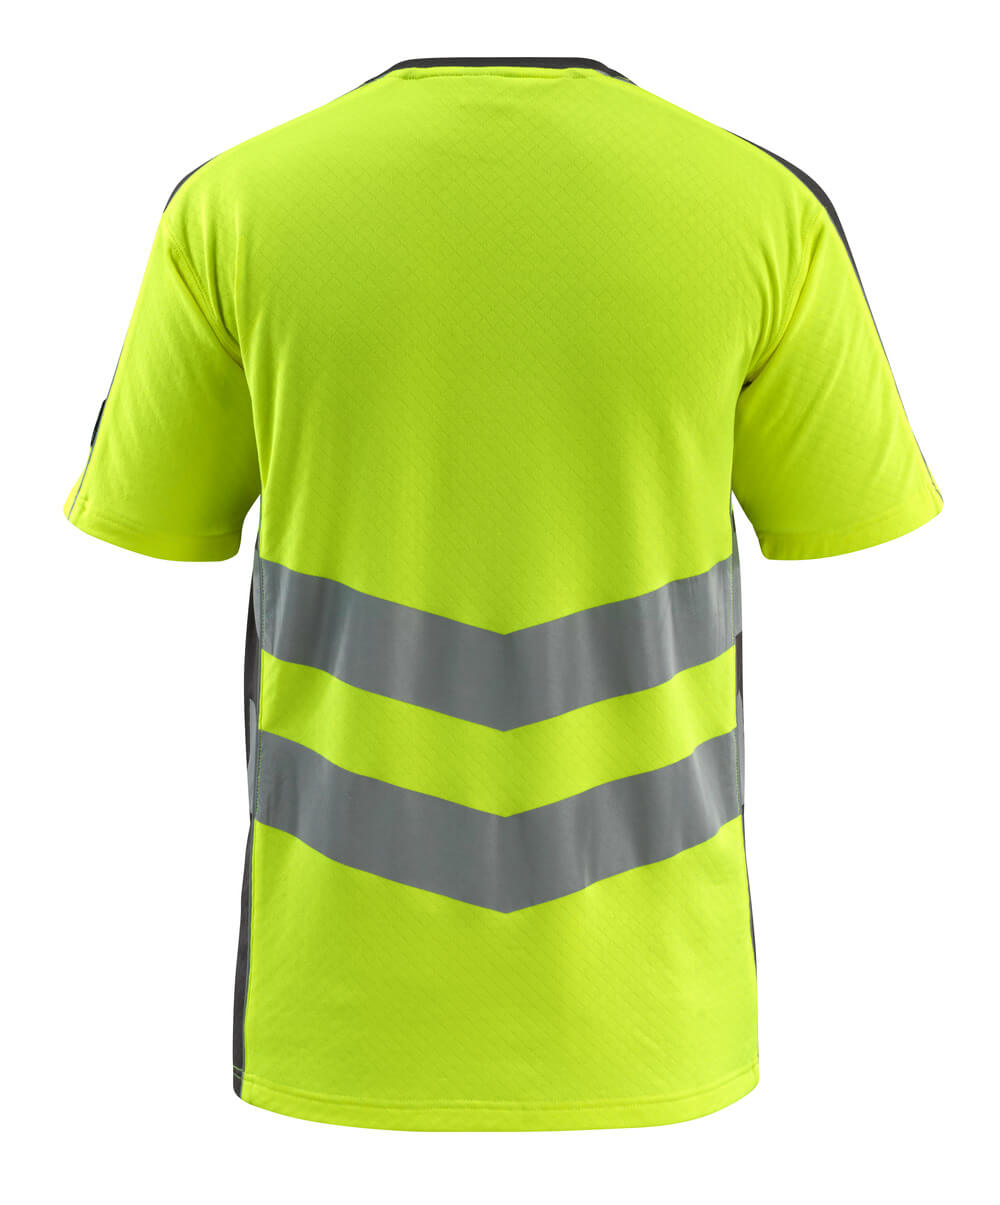 Mascot SAFE SUPREME  Sandwell T-shirt 50127 hi-vis yellow/dark anthracite